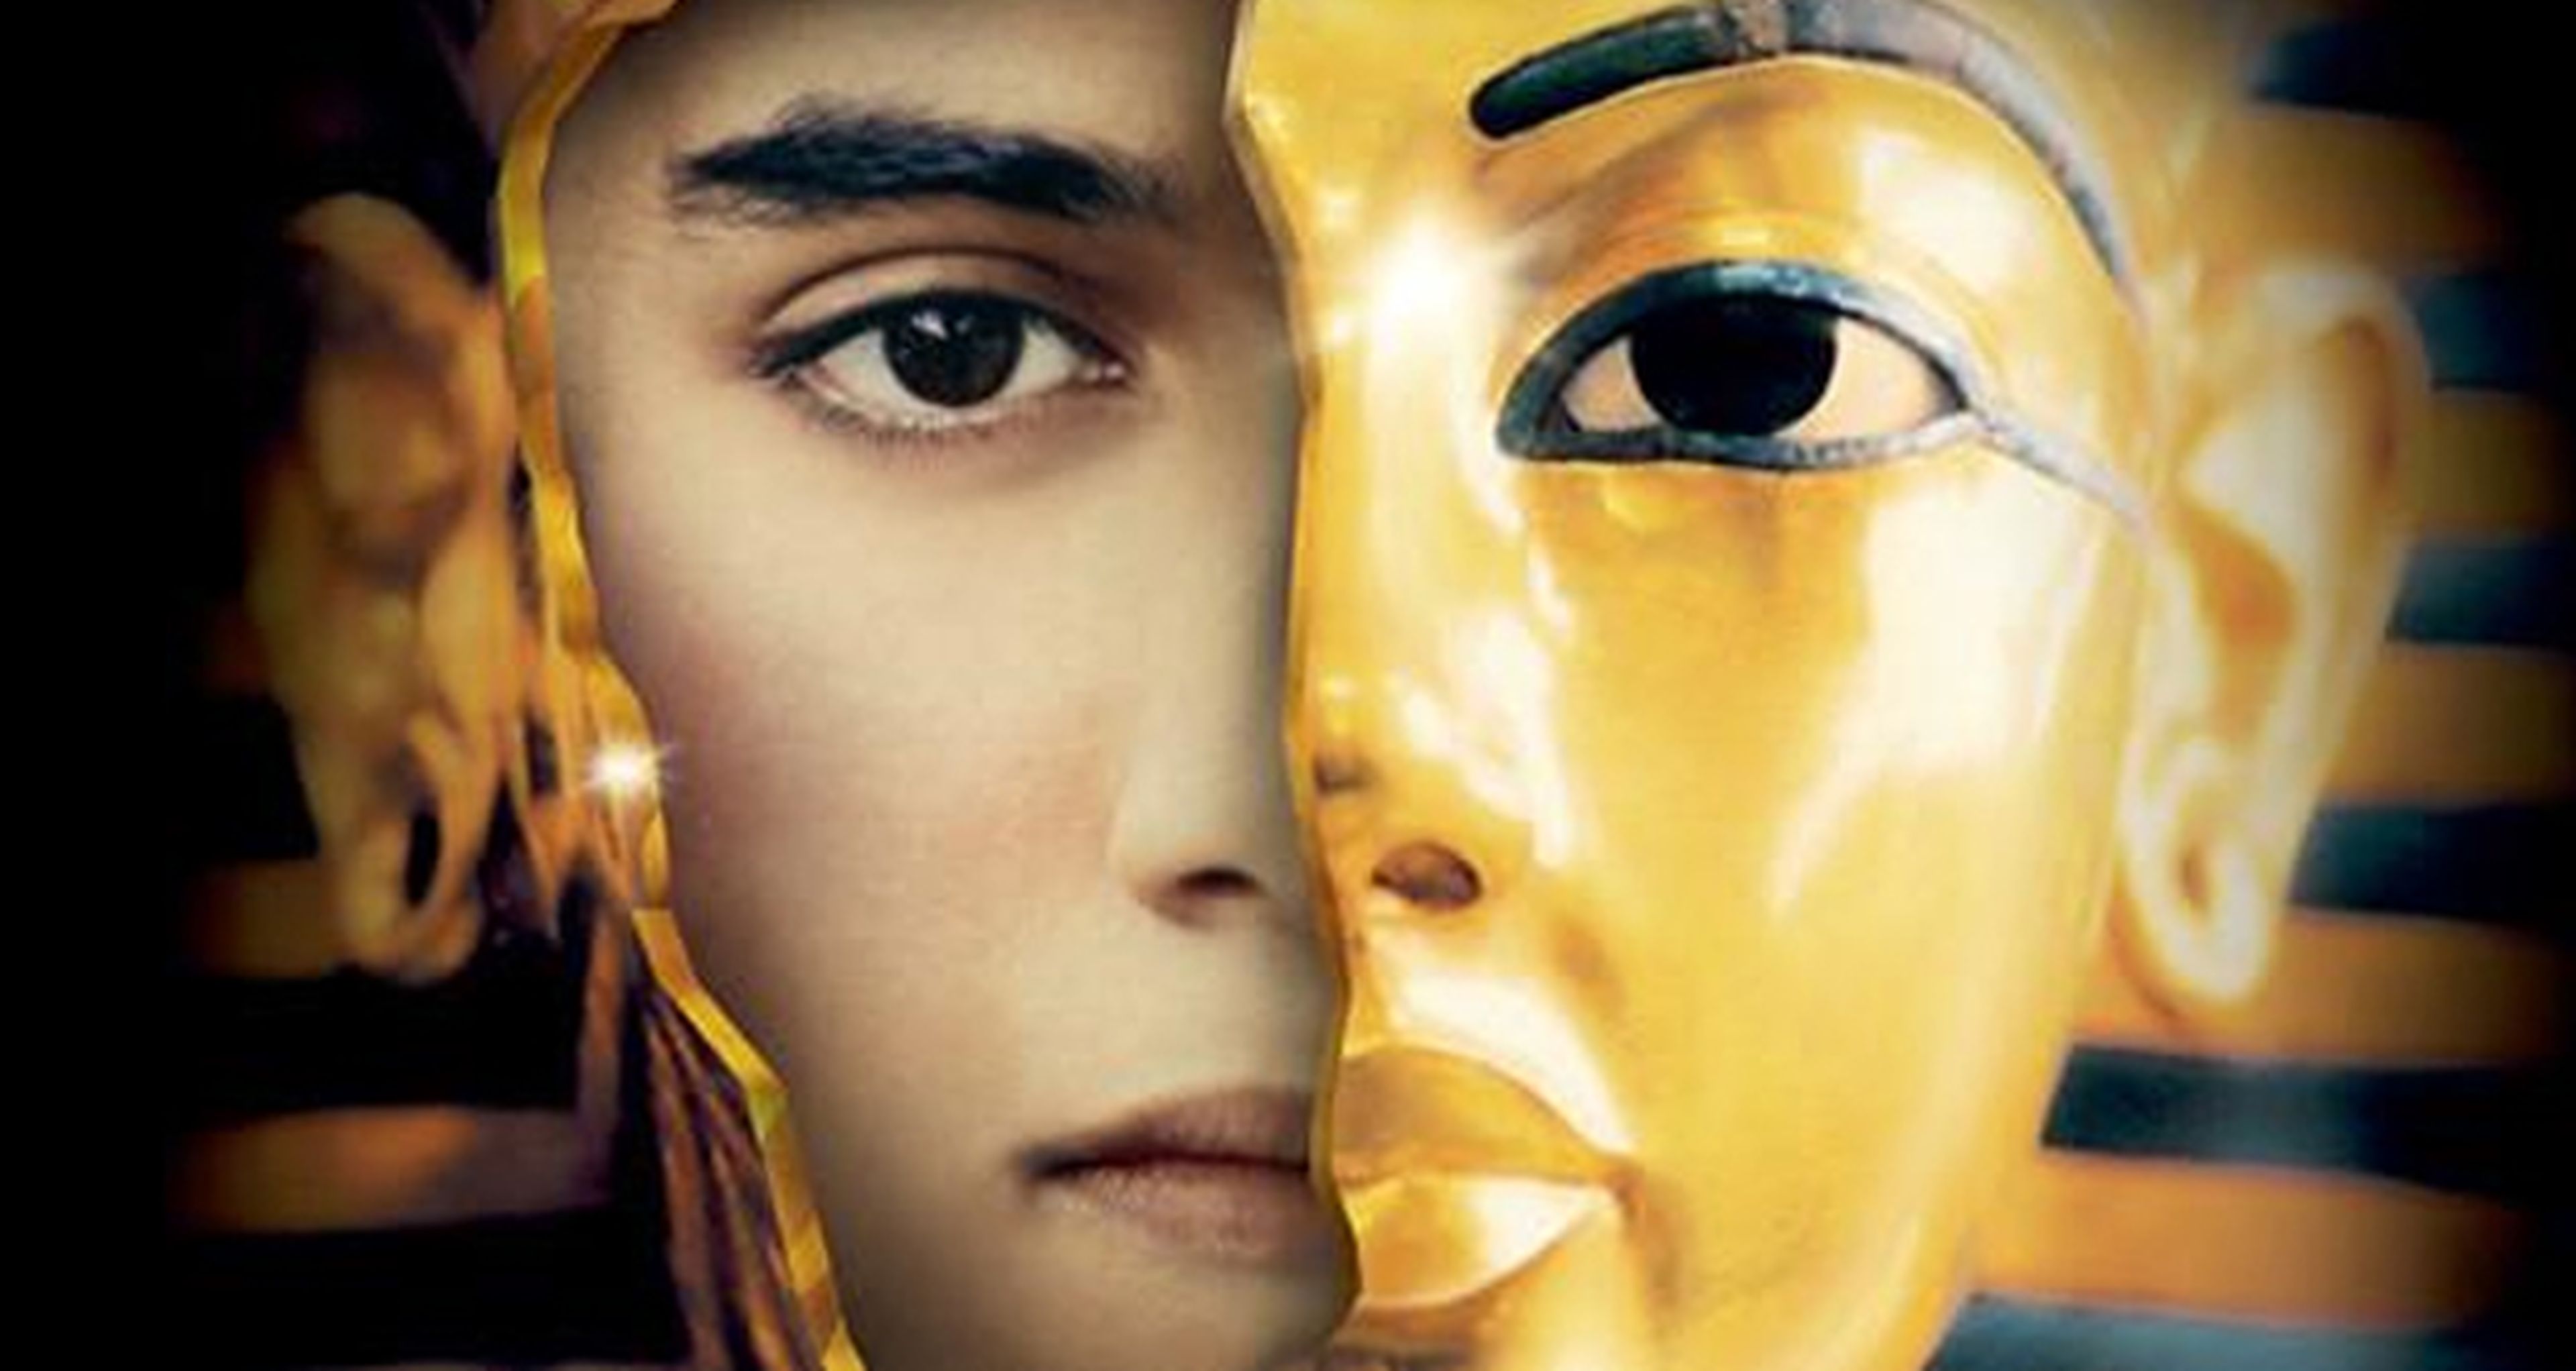 Mediaset emitirá Tut, una miniserie sobre Egipto con Ben Kingsley